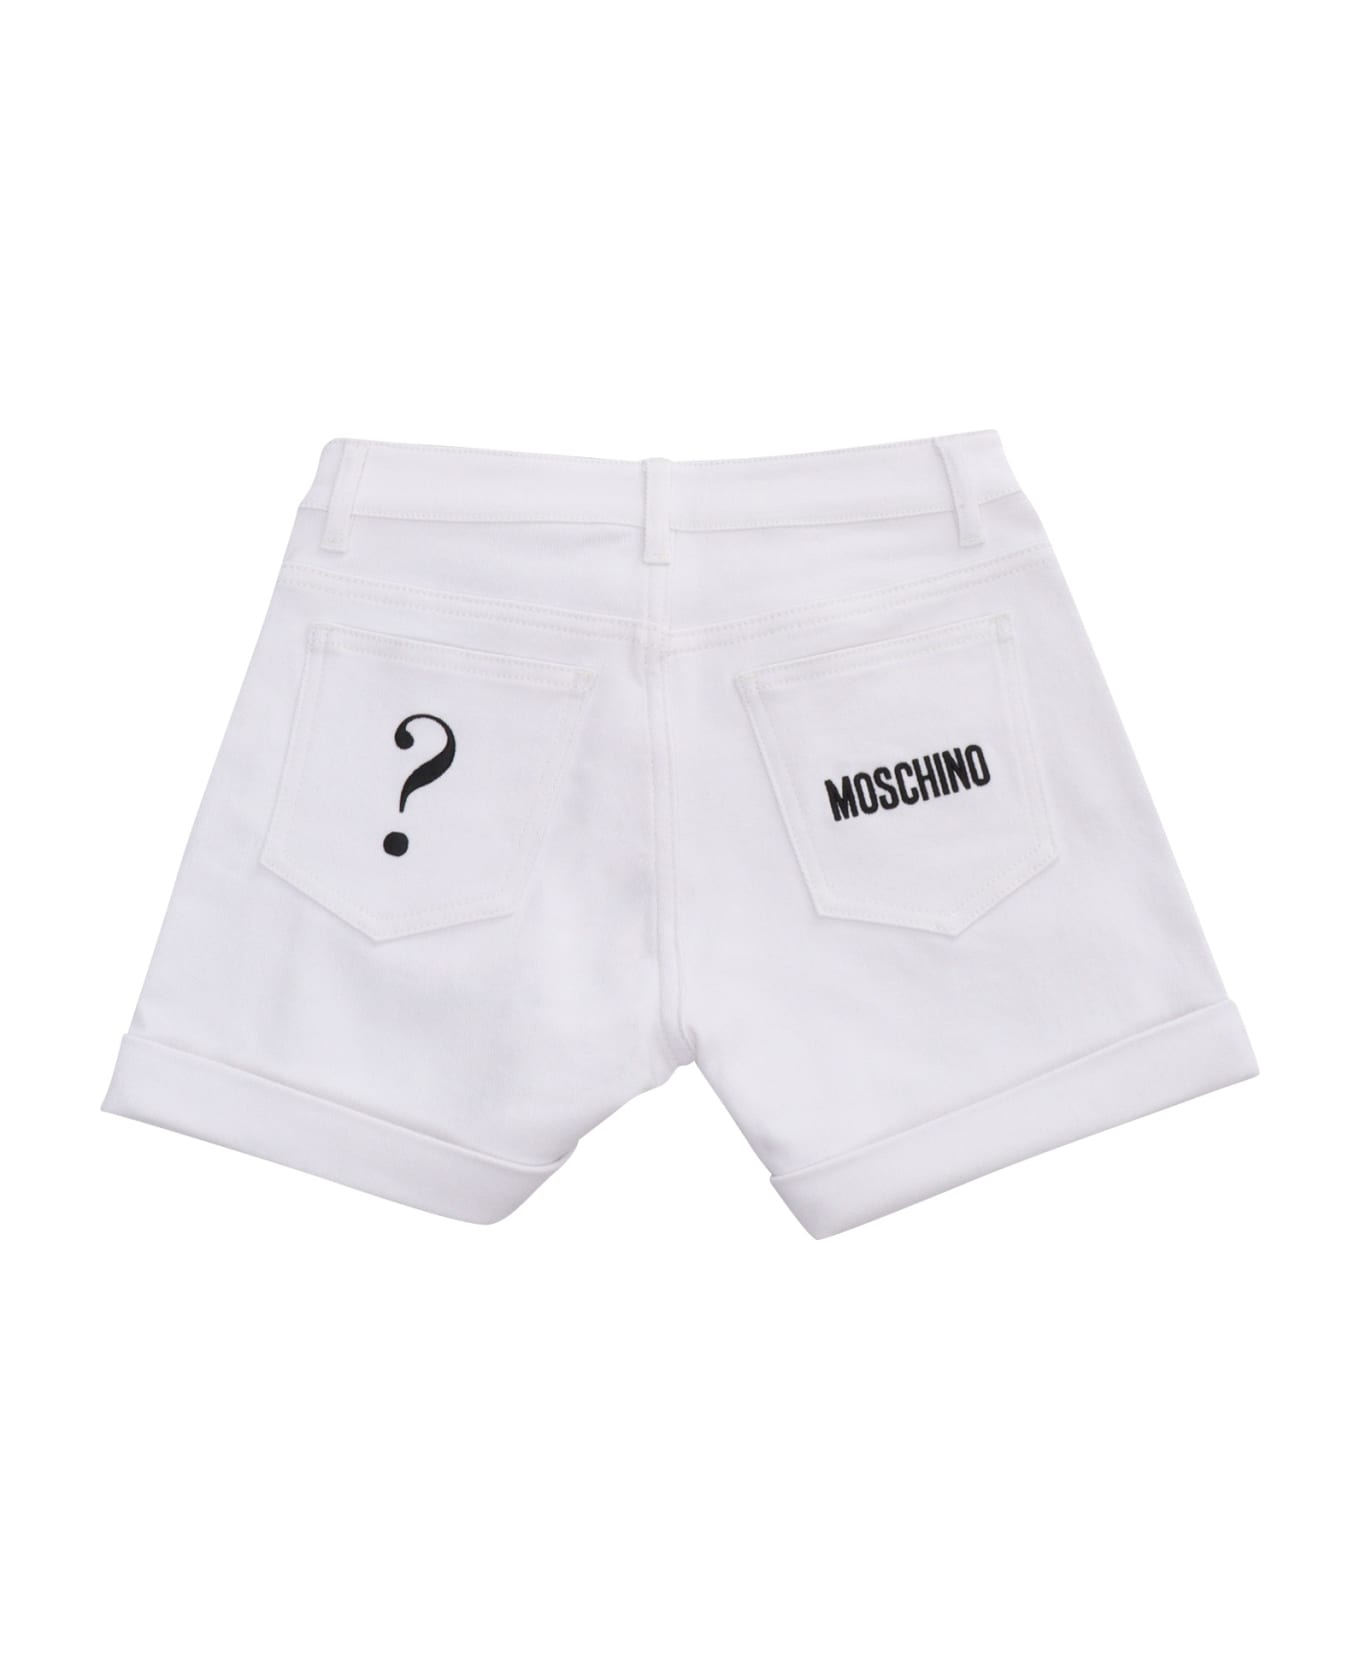 Moschino White Shorts - WHITE